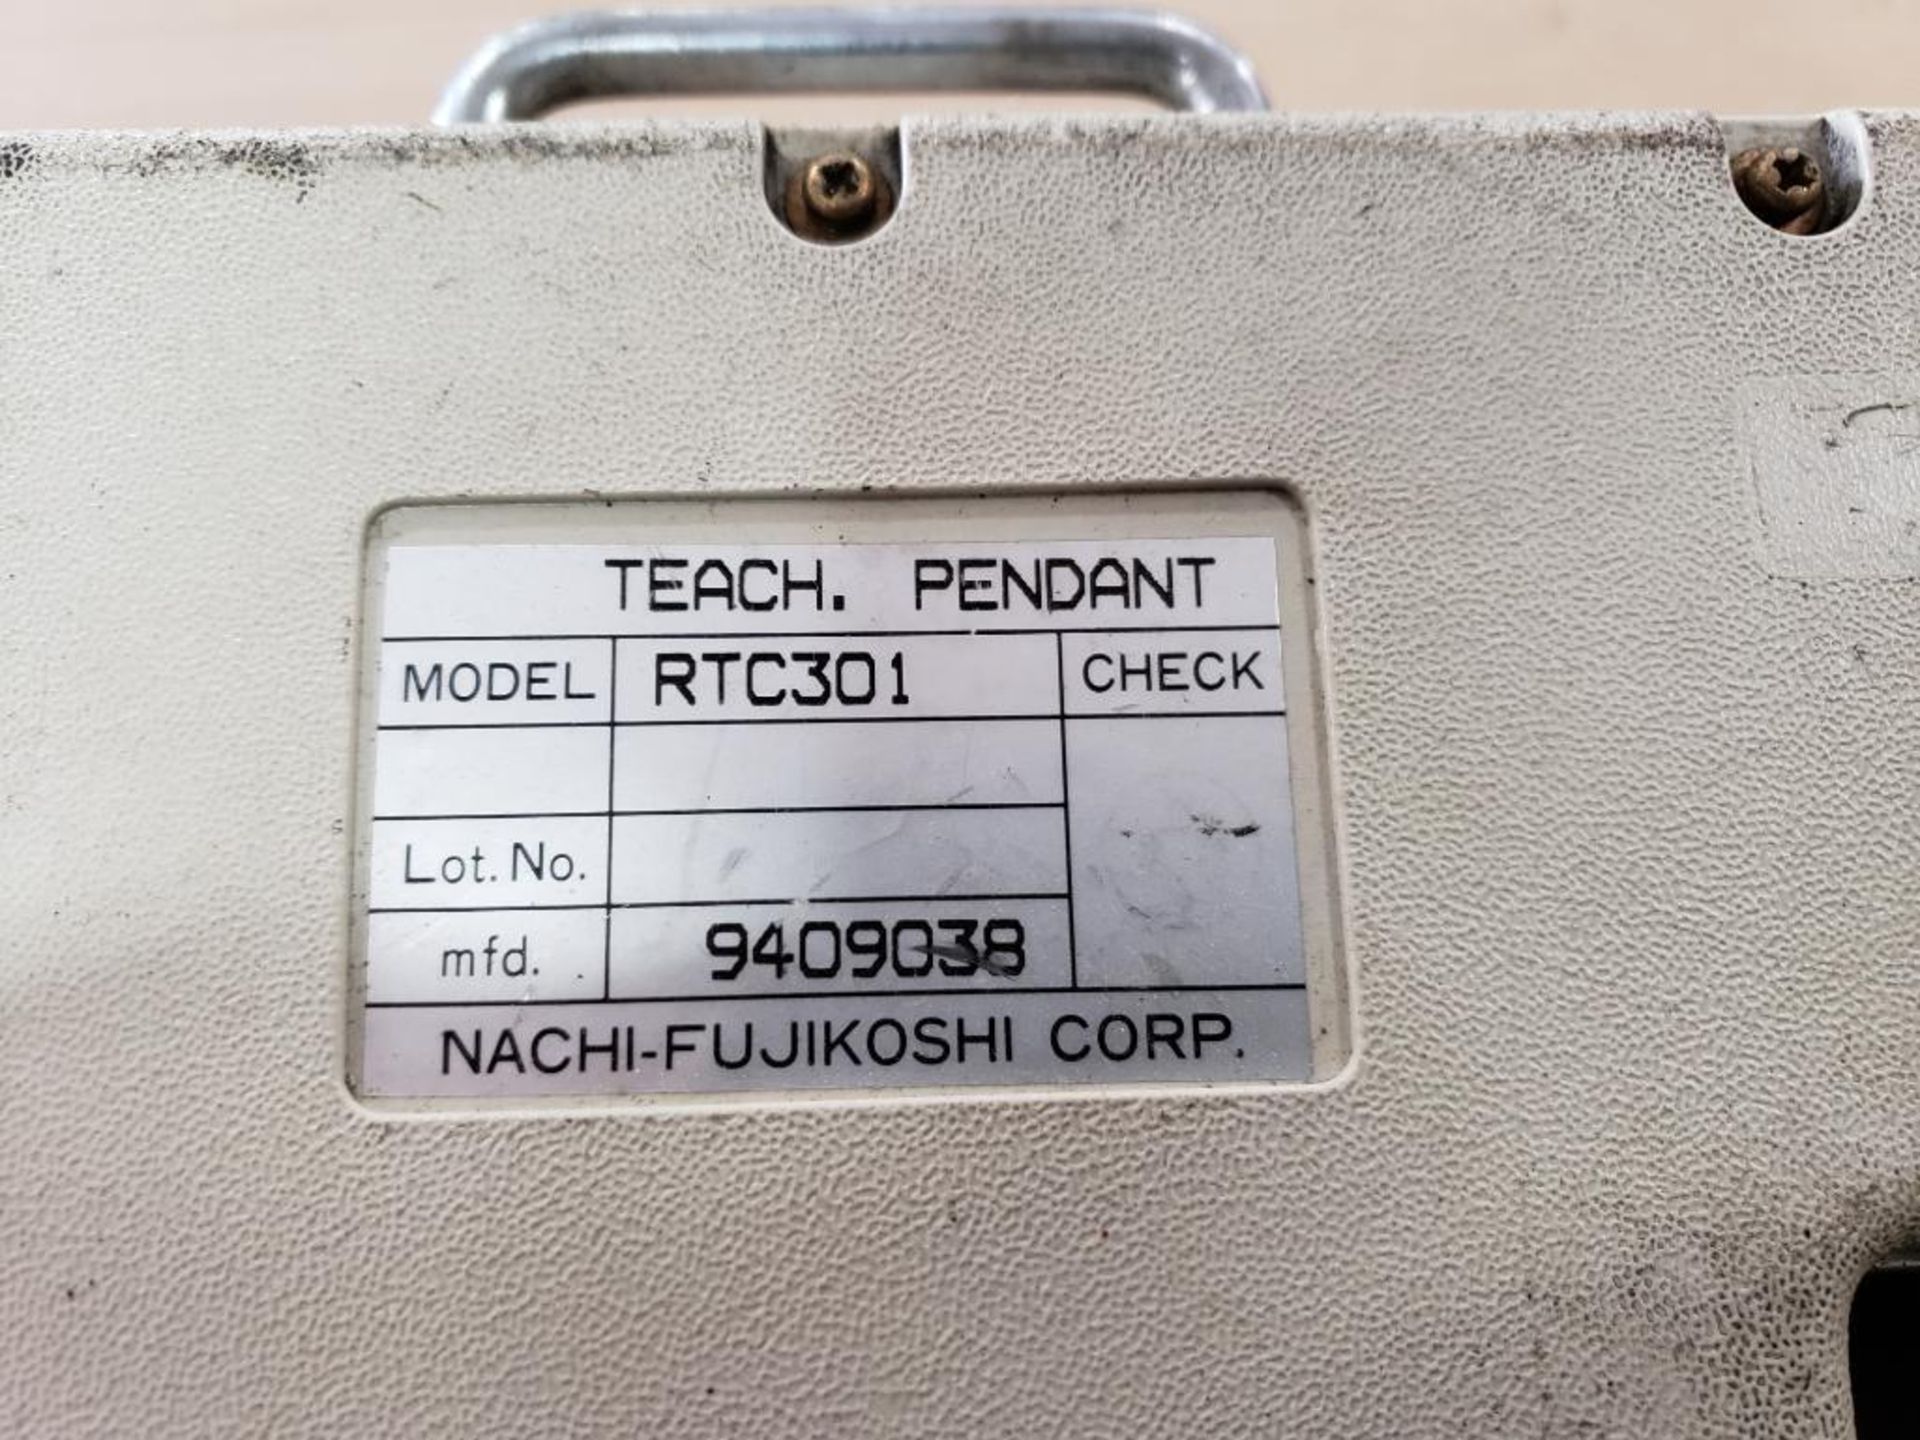 Nachi robot teach pendant RTC301. - Image 4 of 5